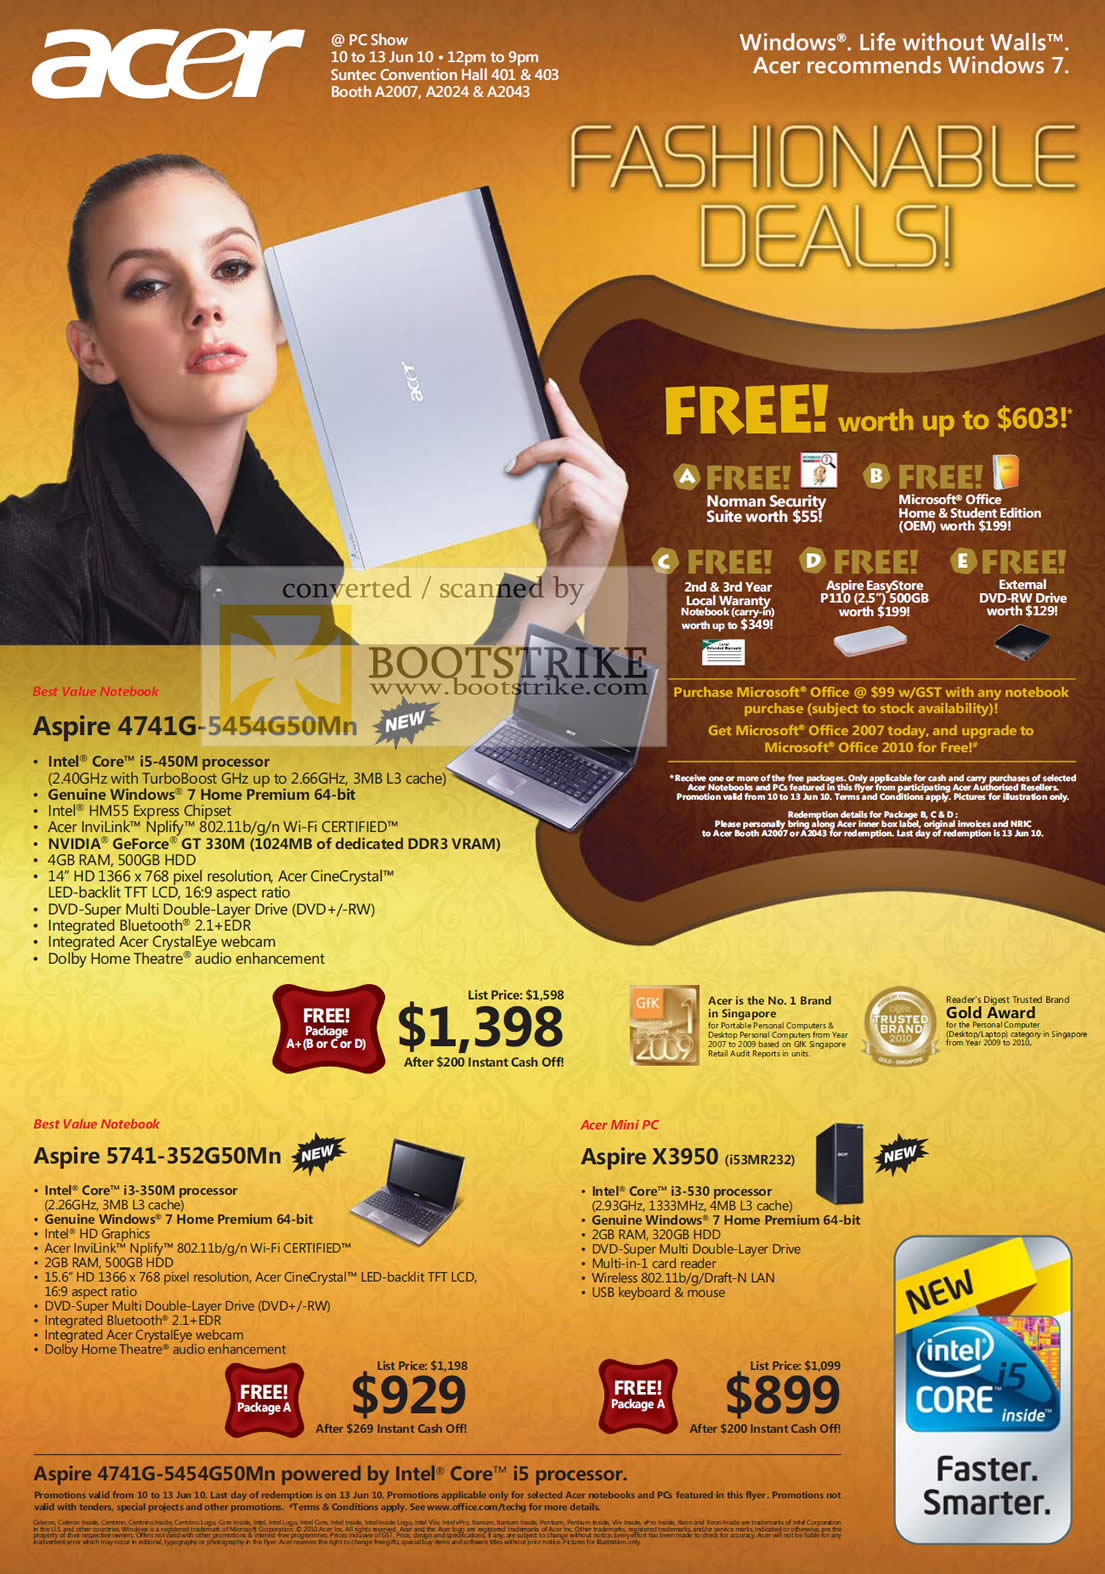 PC Show 2010 price list image brochure of Acer Notebooks Aspire 4741G 5741 Desktop Mini PC X3950